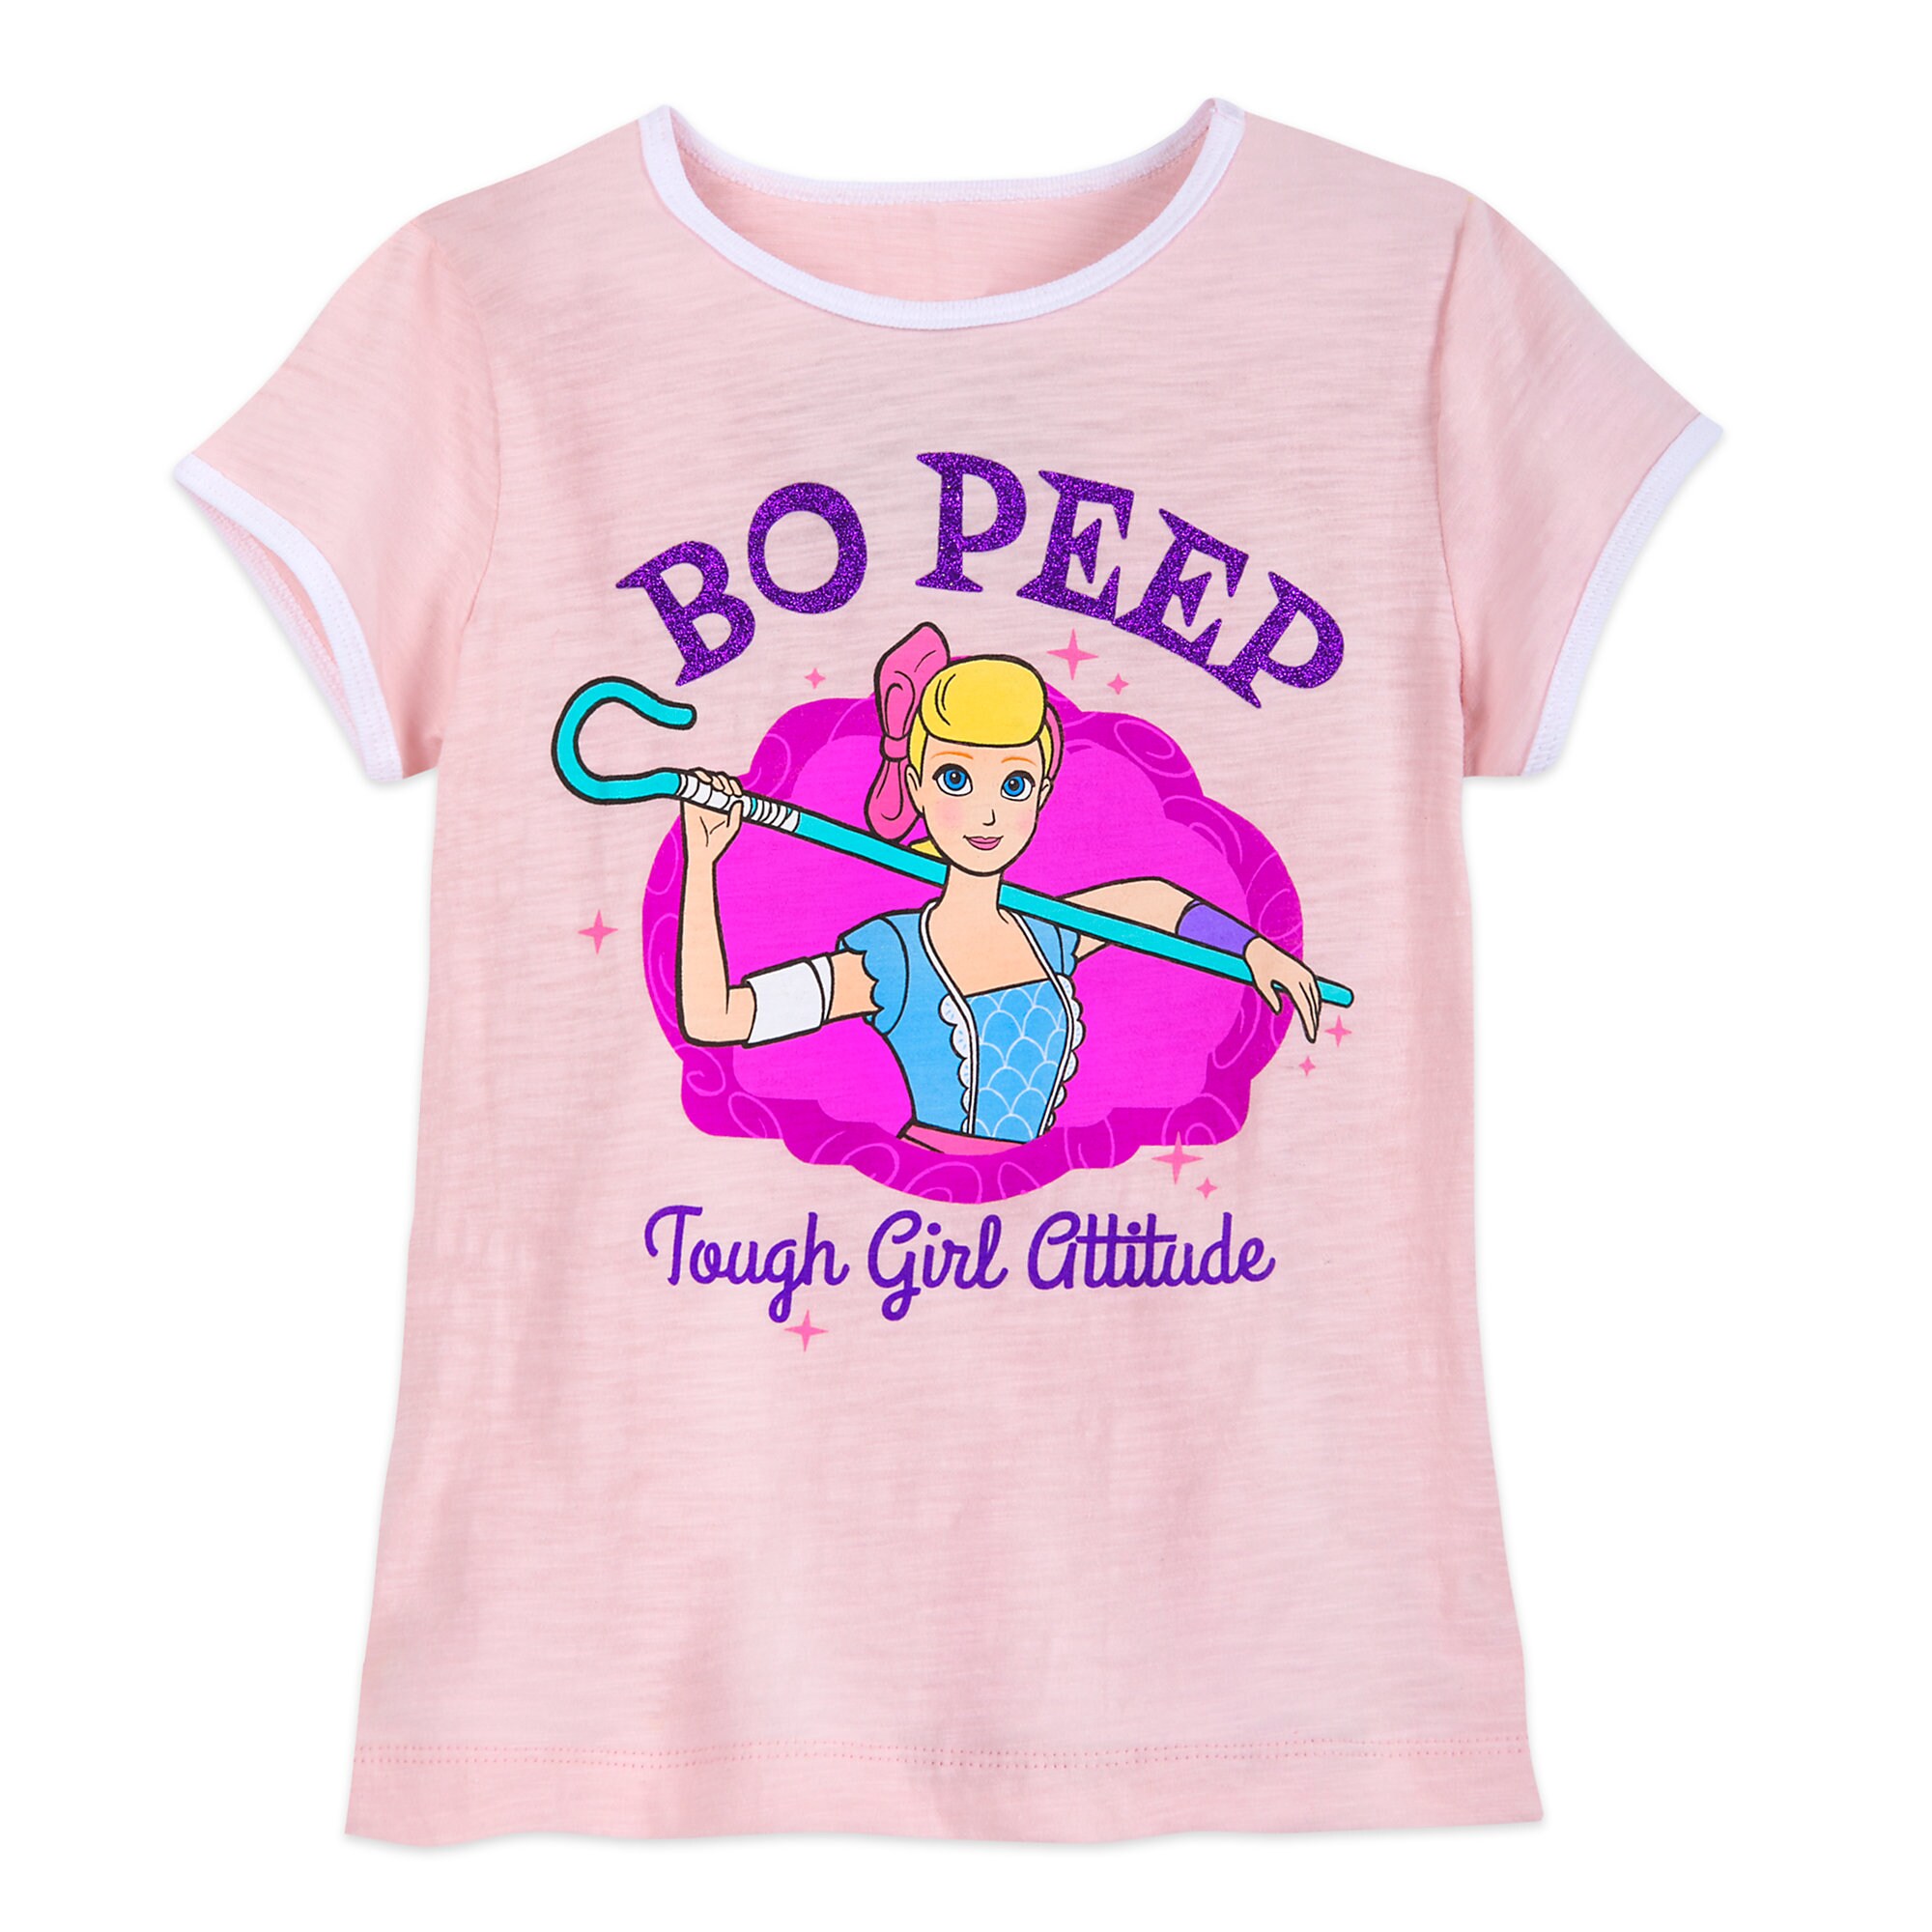 Bo Peep ''Tough Girl Attitude'' T-Shirt for Girls - Toy Story 4